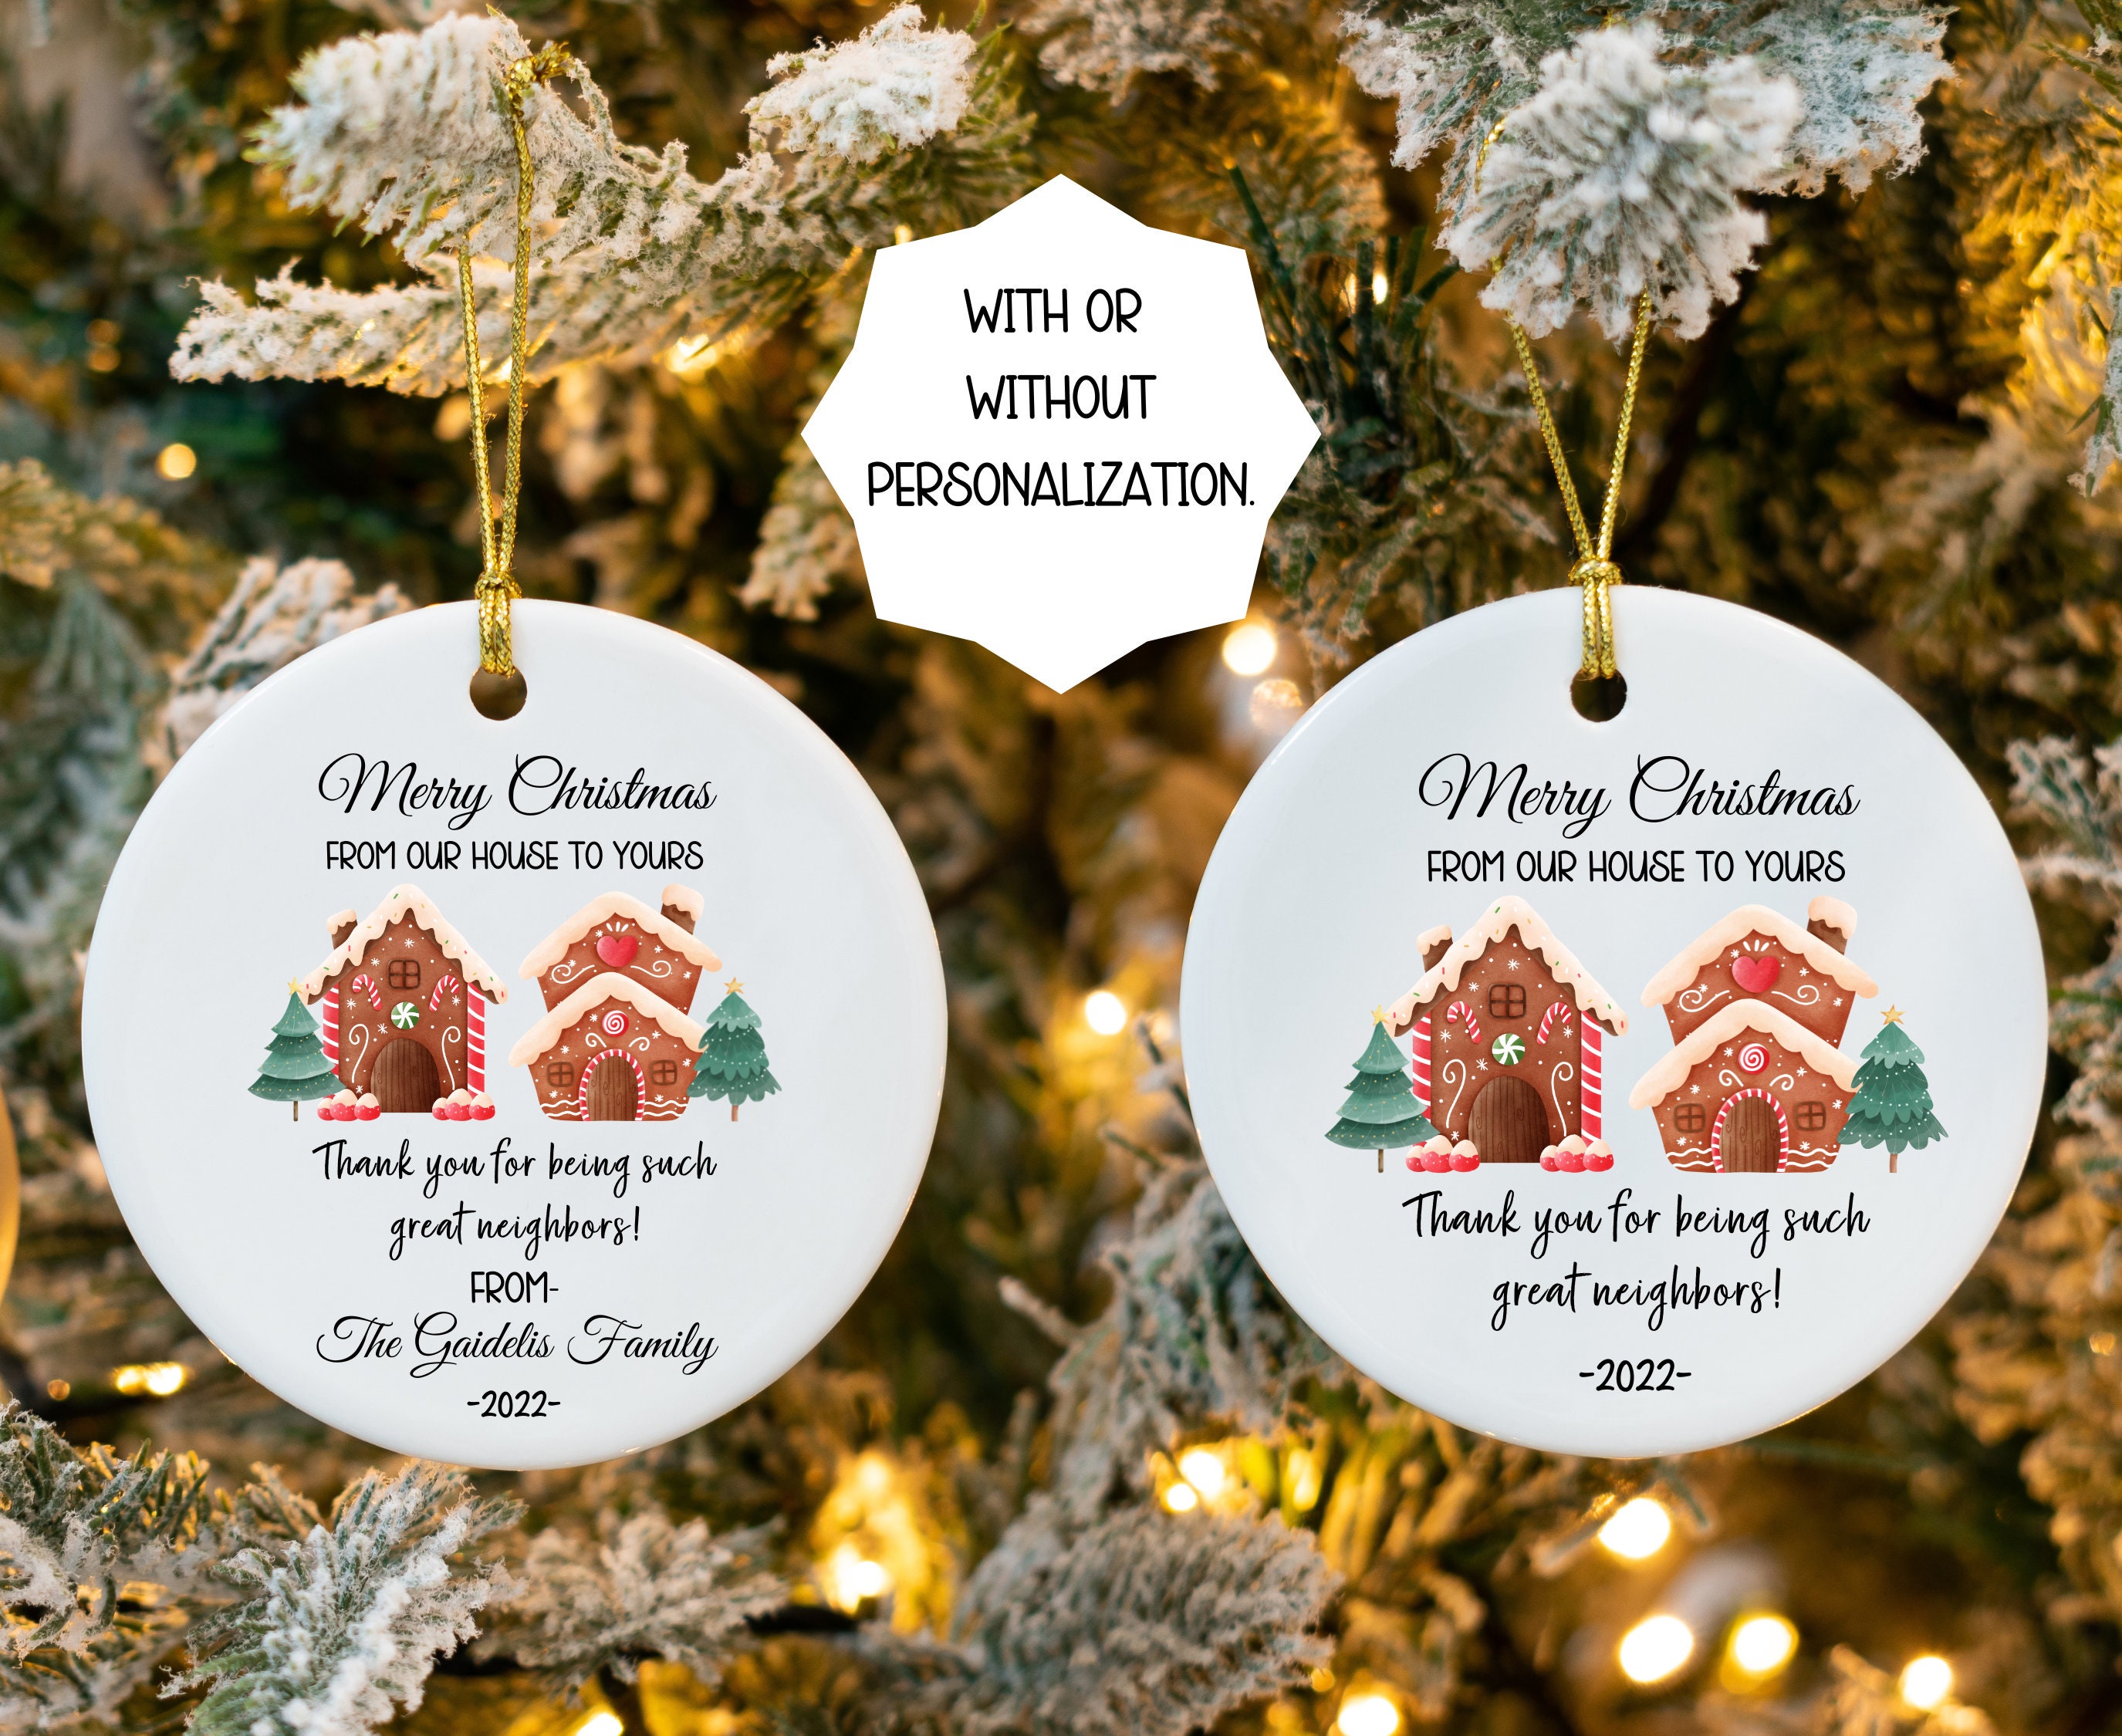  LEZAME Neighbor Gifts - Neighbor Christmas Ornament, Neighbor  Ornament, Friendship Christmas Ornament - Gift for Neighbor Friend -  Gingerbread Neighbor Design, Comes in Gift Box : Home & Kitchen